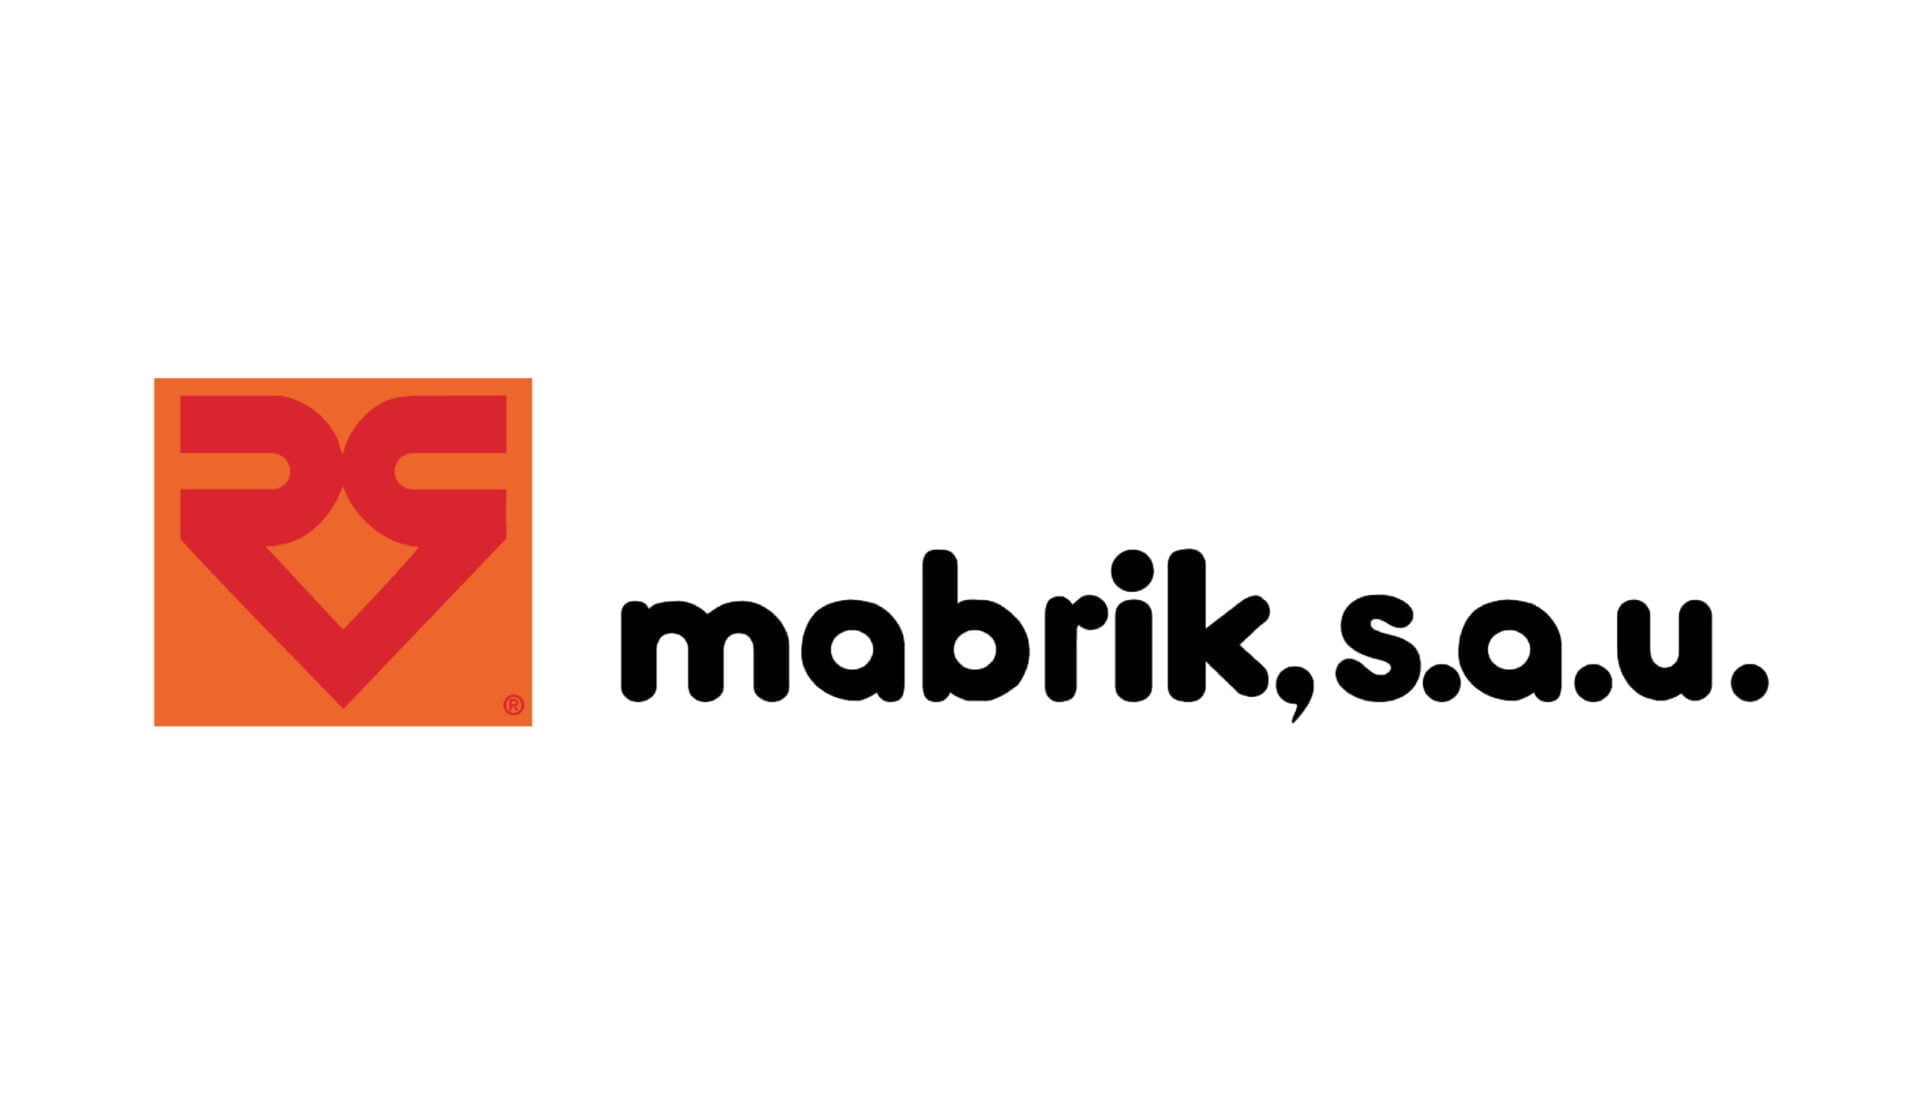 Mabrik, S.A.U. logo with stylized red and orange design